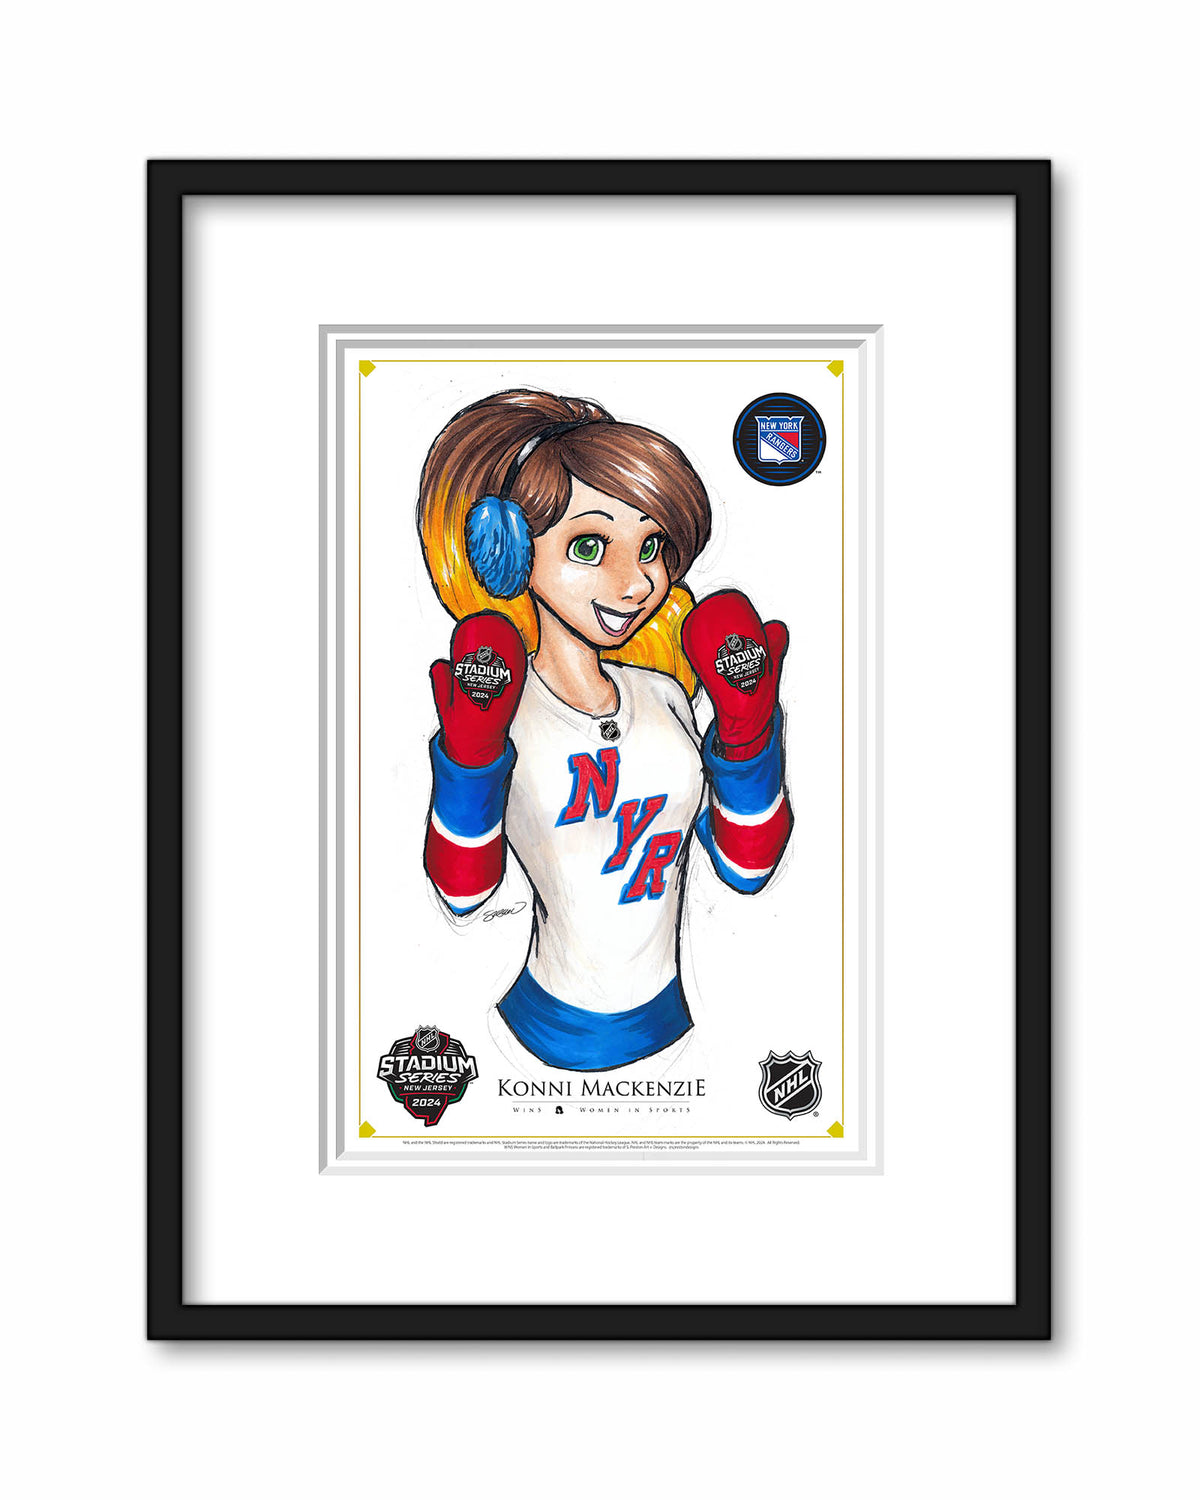 WinS® NHL Konni Mackenzie 2024 Stadium Series New York Rangers Poster Print